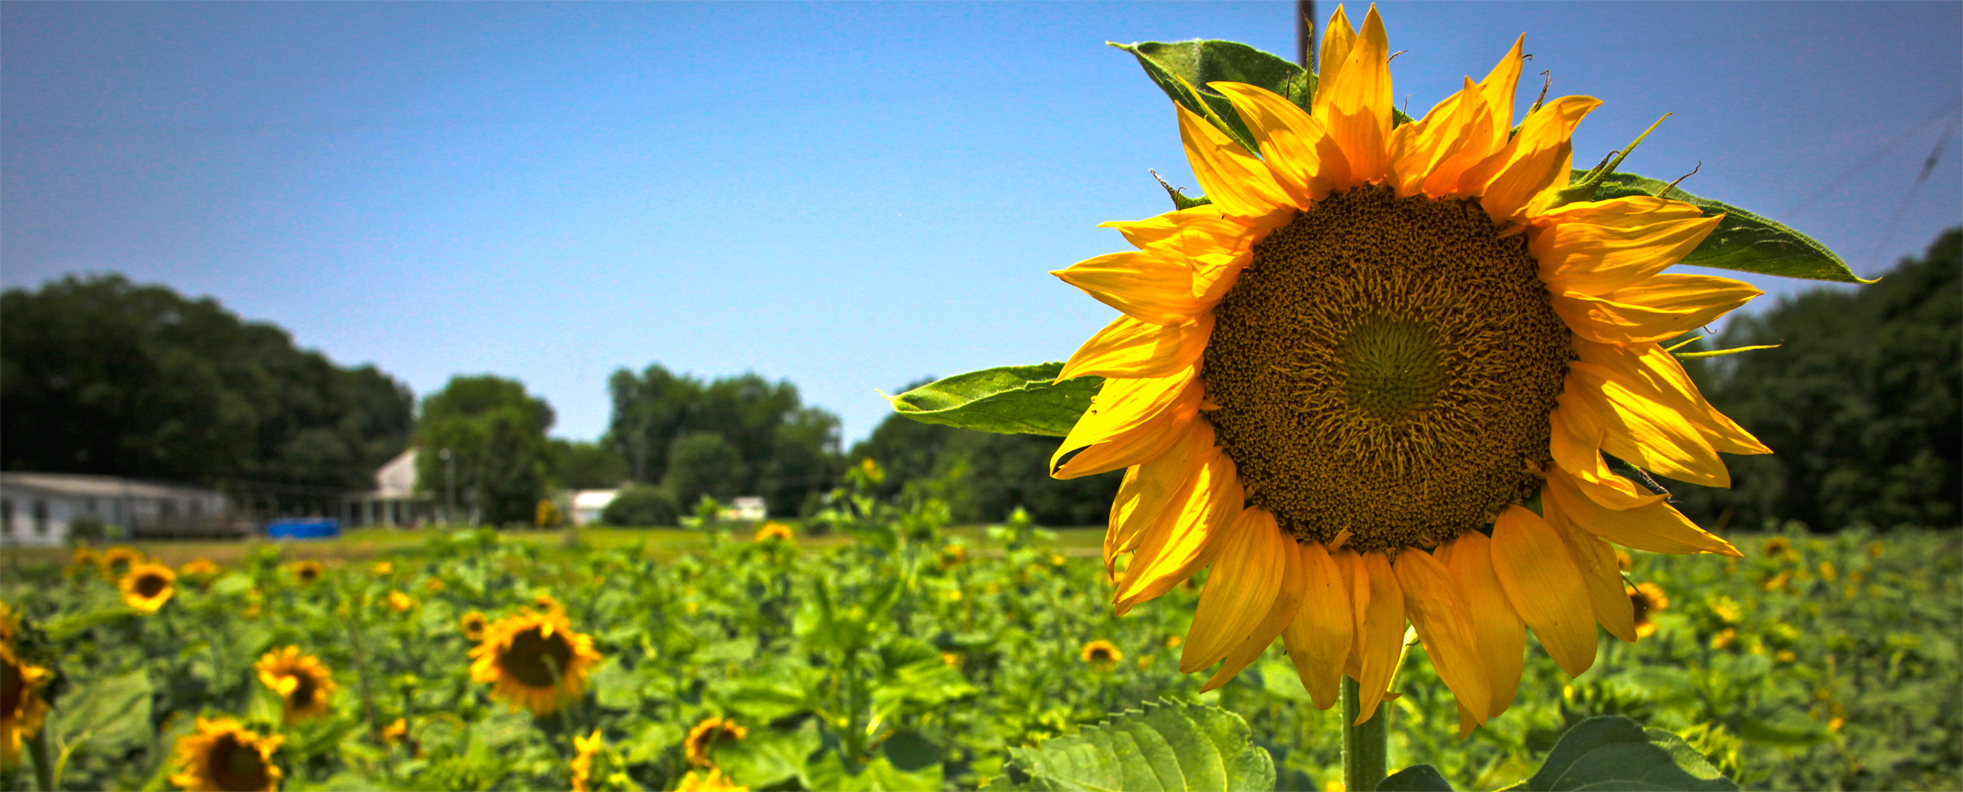 A photo of a sunflower